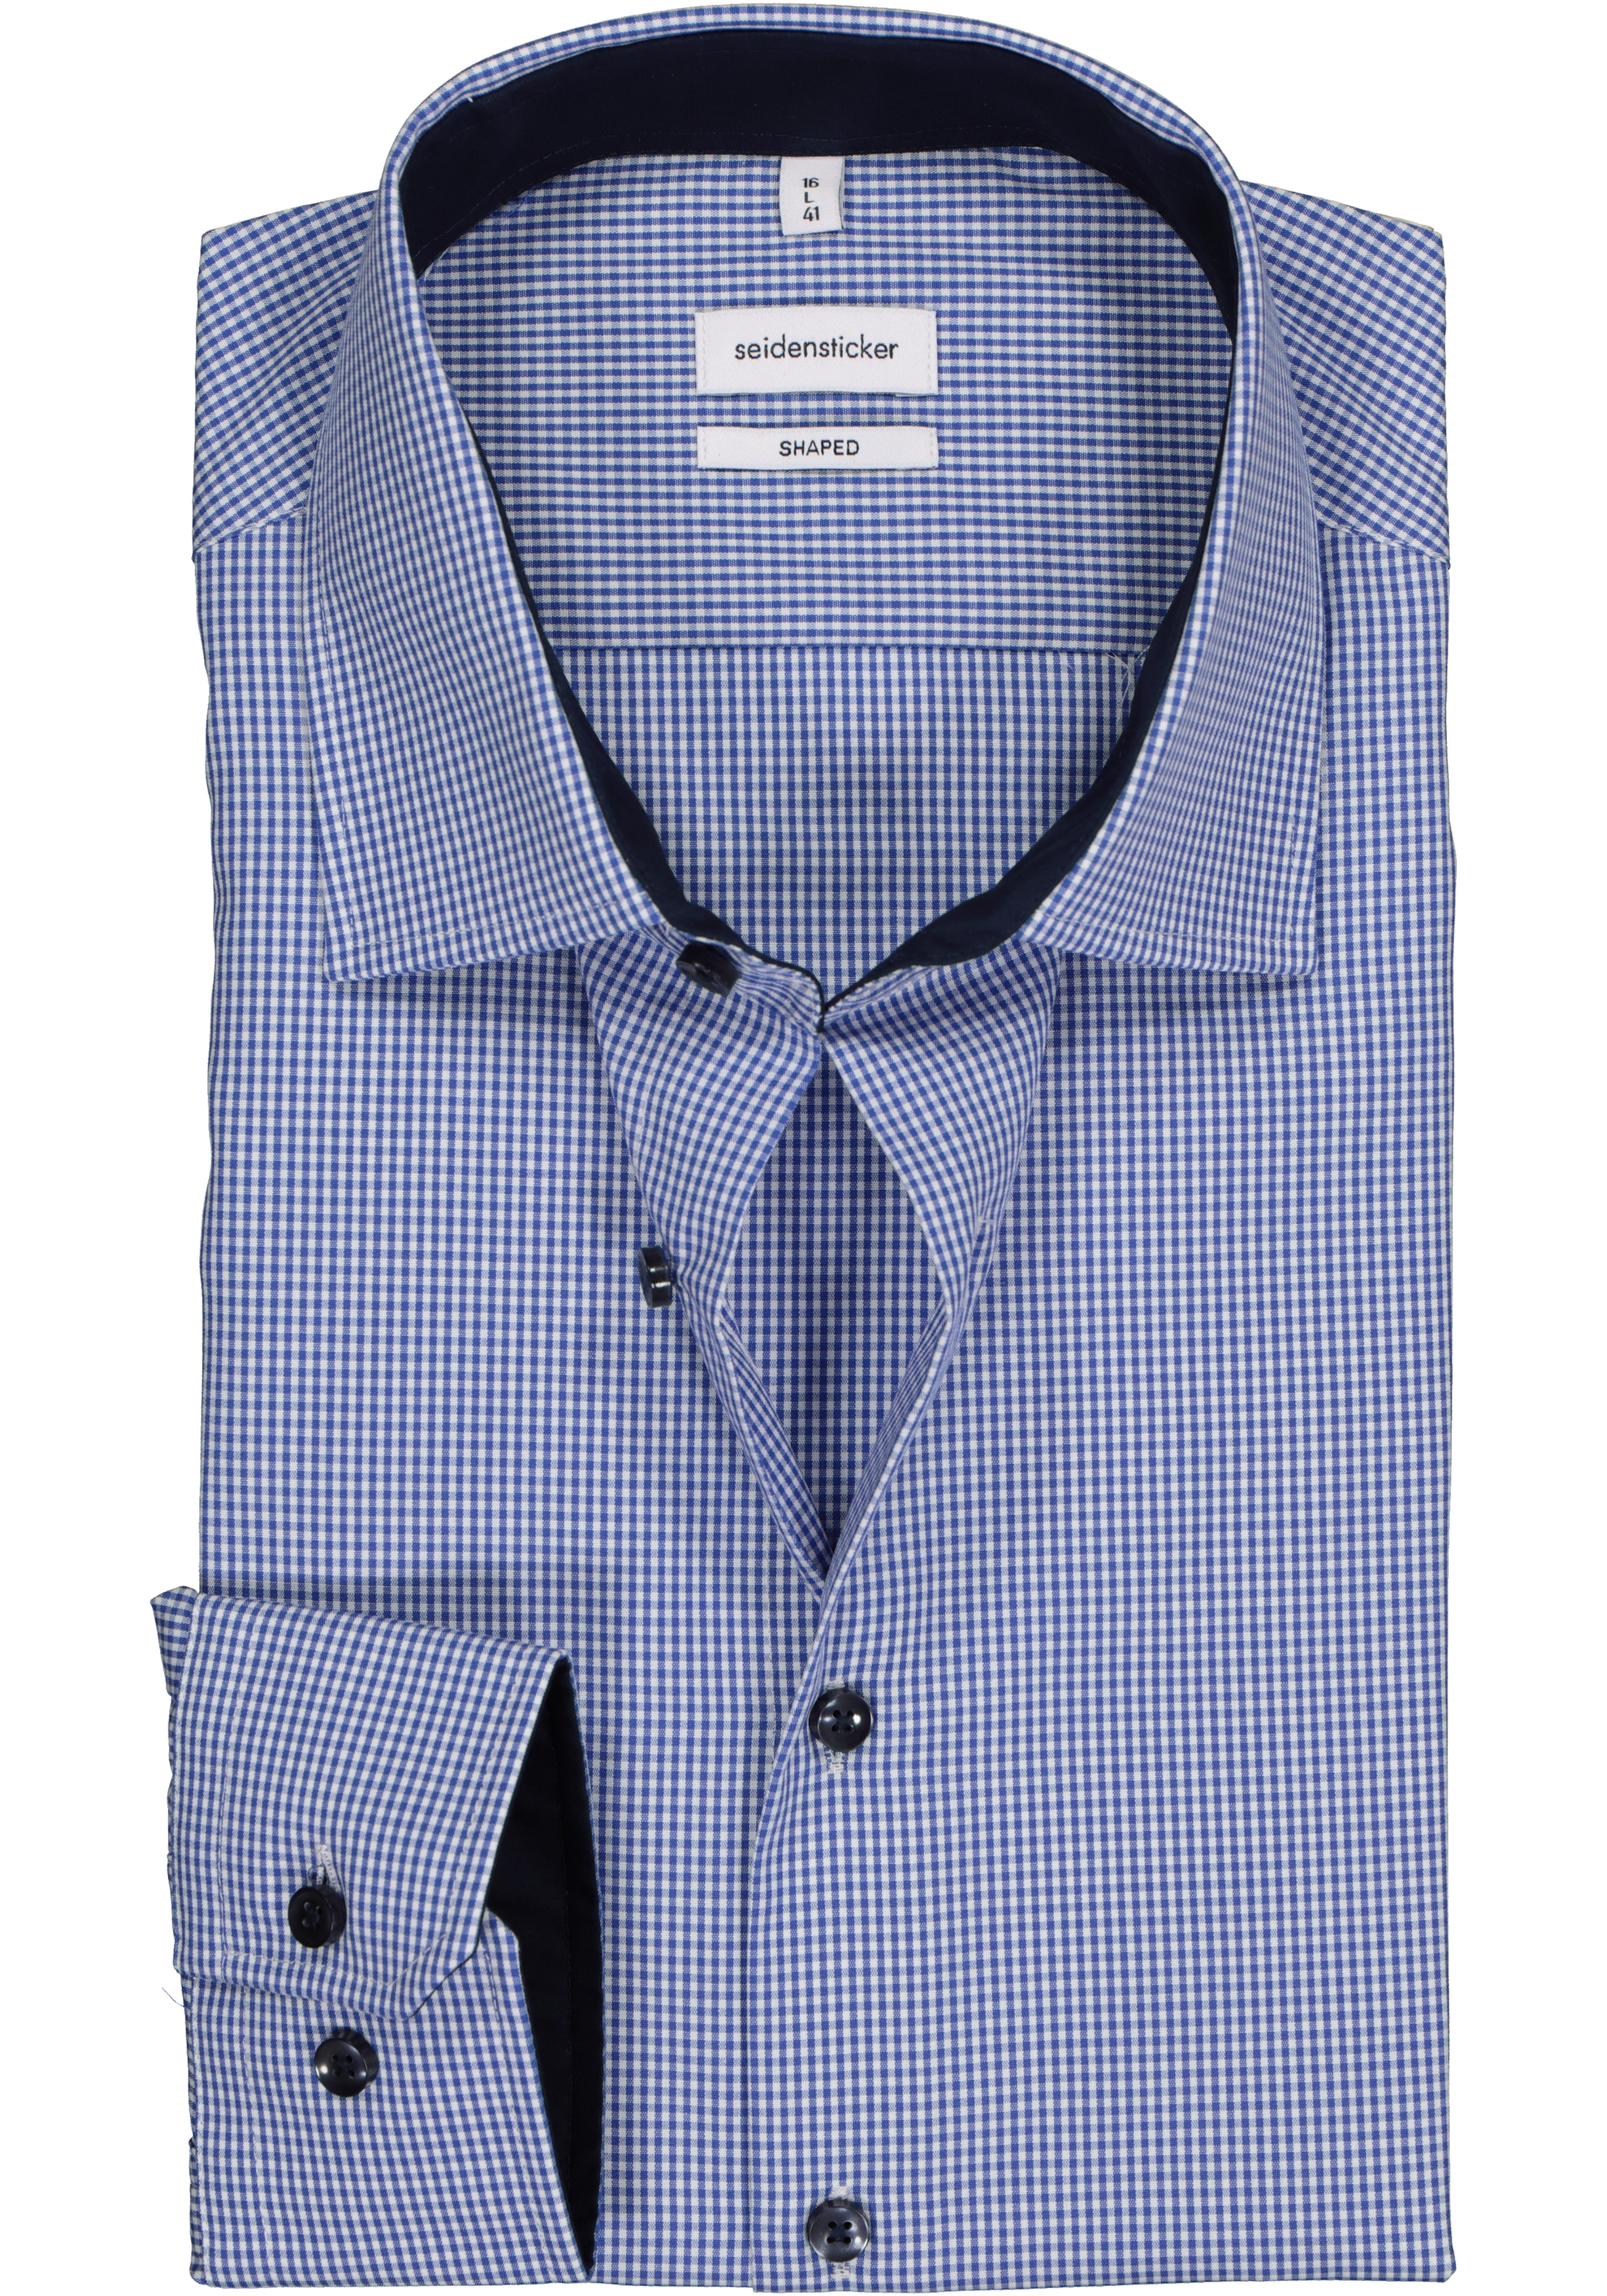 Seidensticker shaped fit overhemd, blauw met wit geruit (contrast)